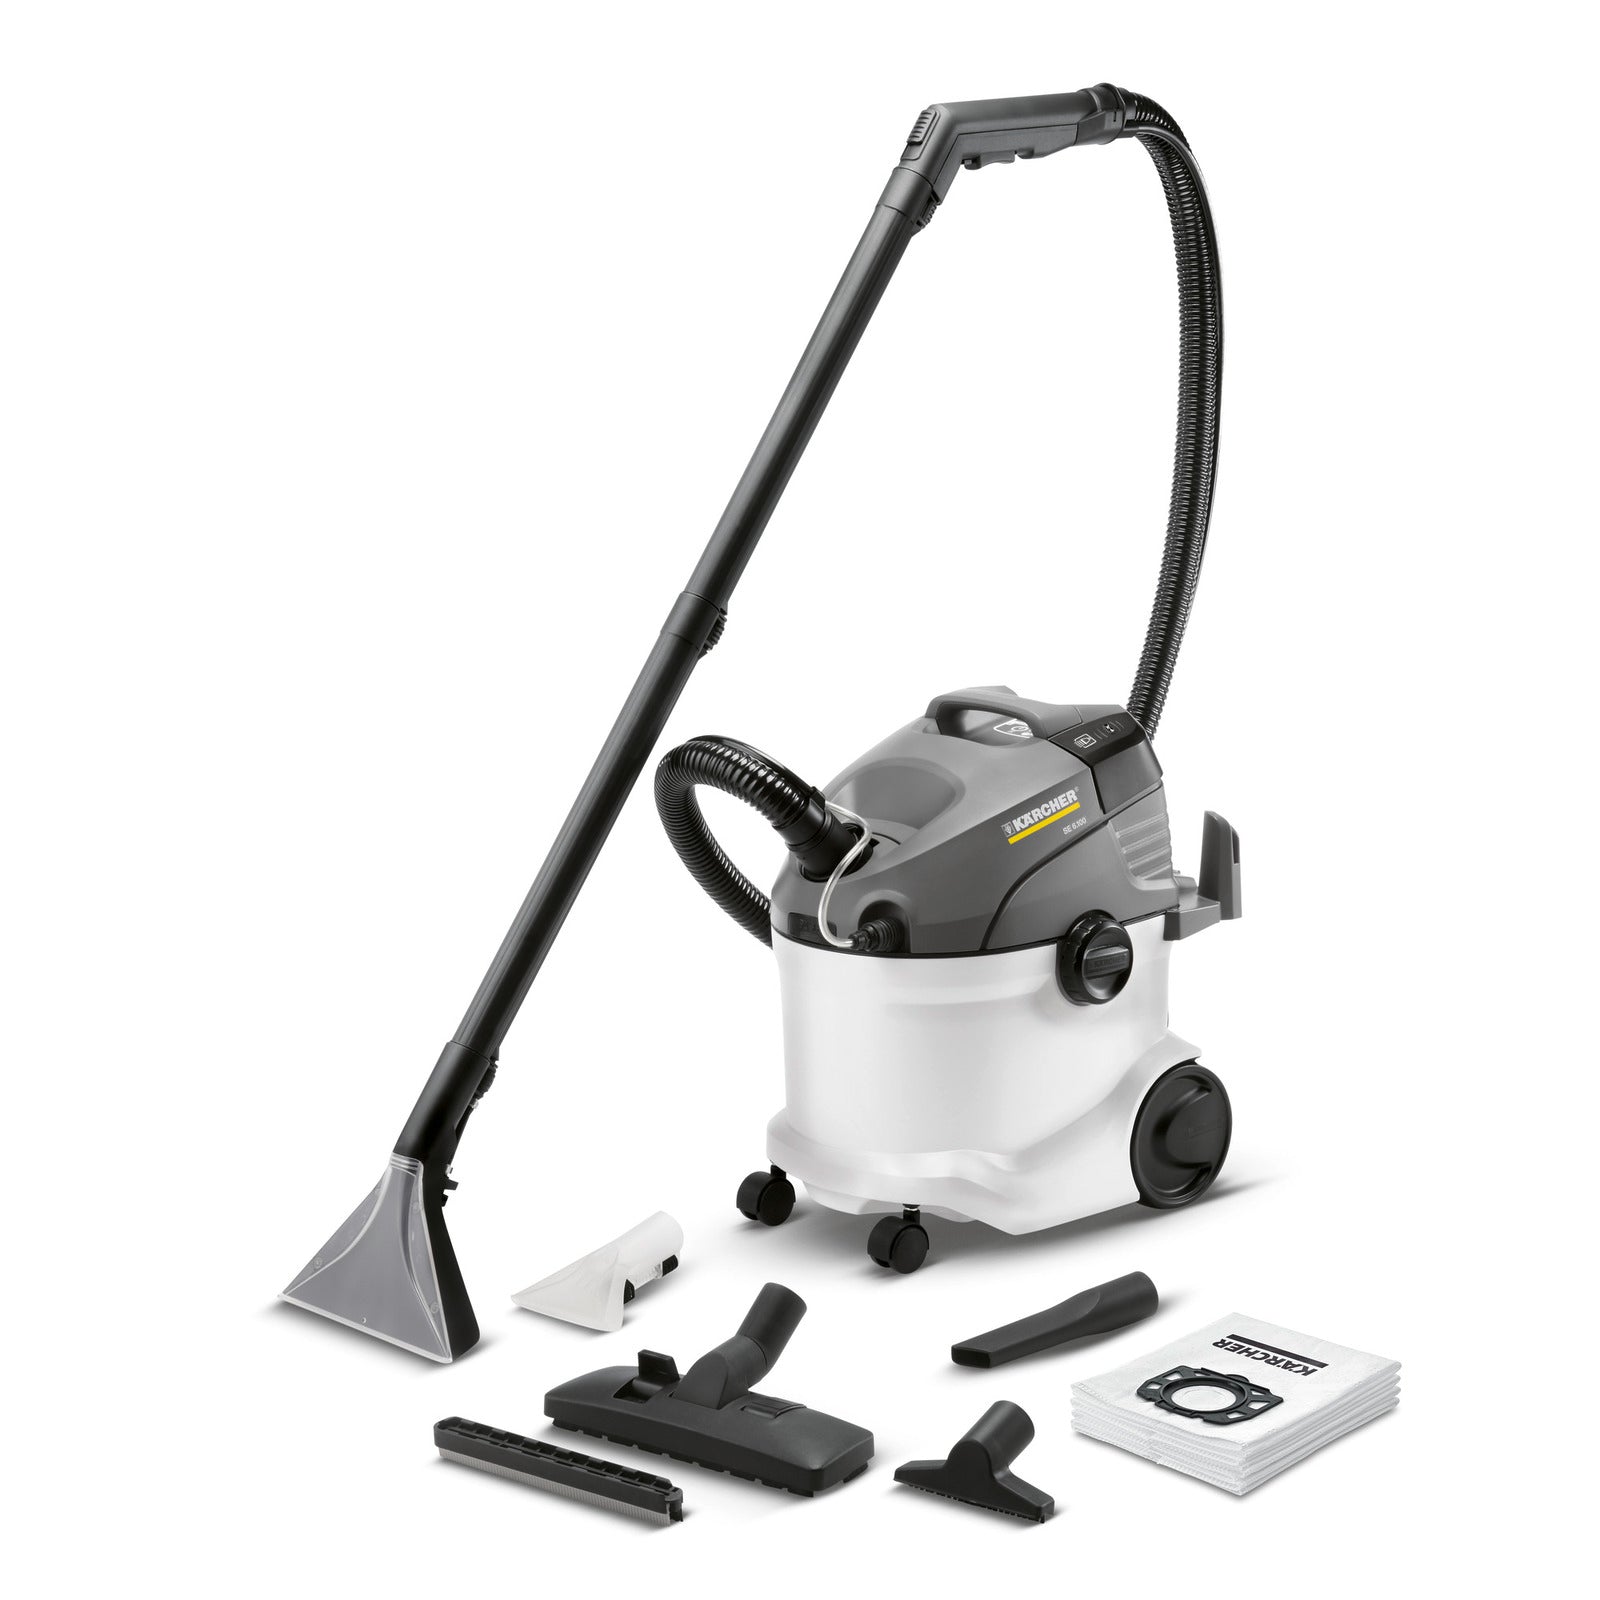 Kärcher vacuum cleaner SE 6.100